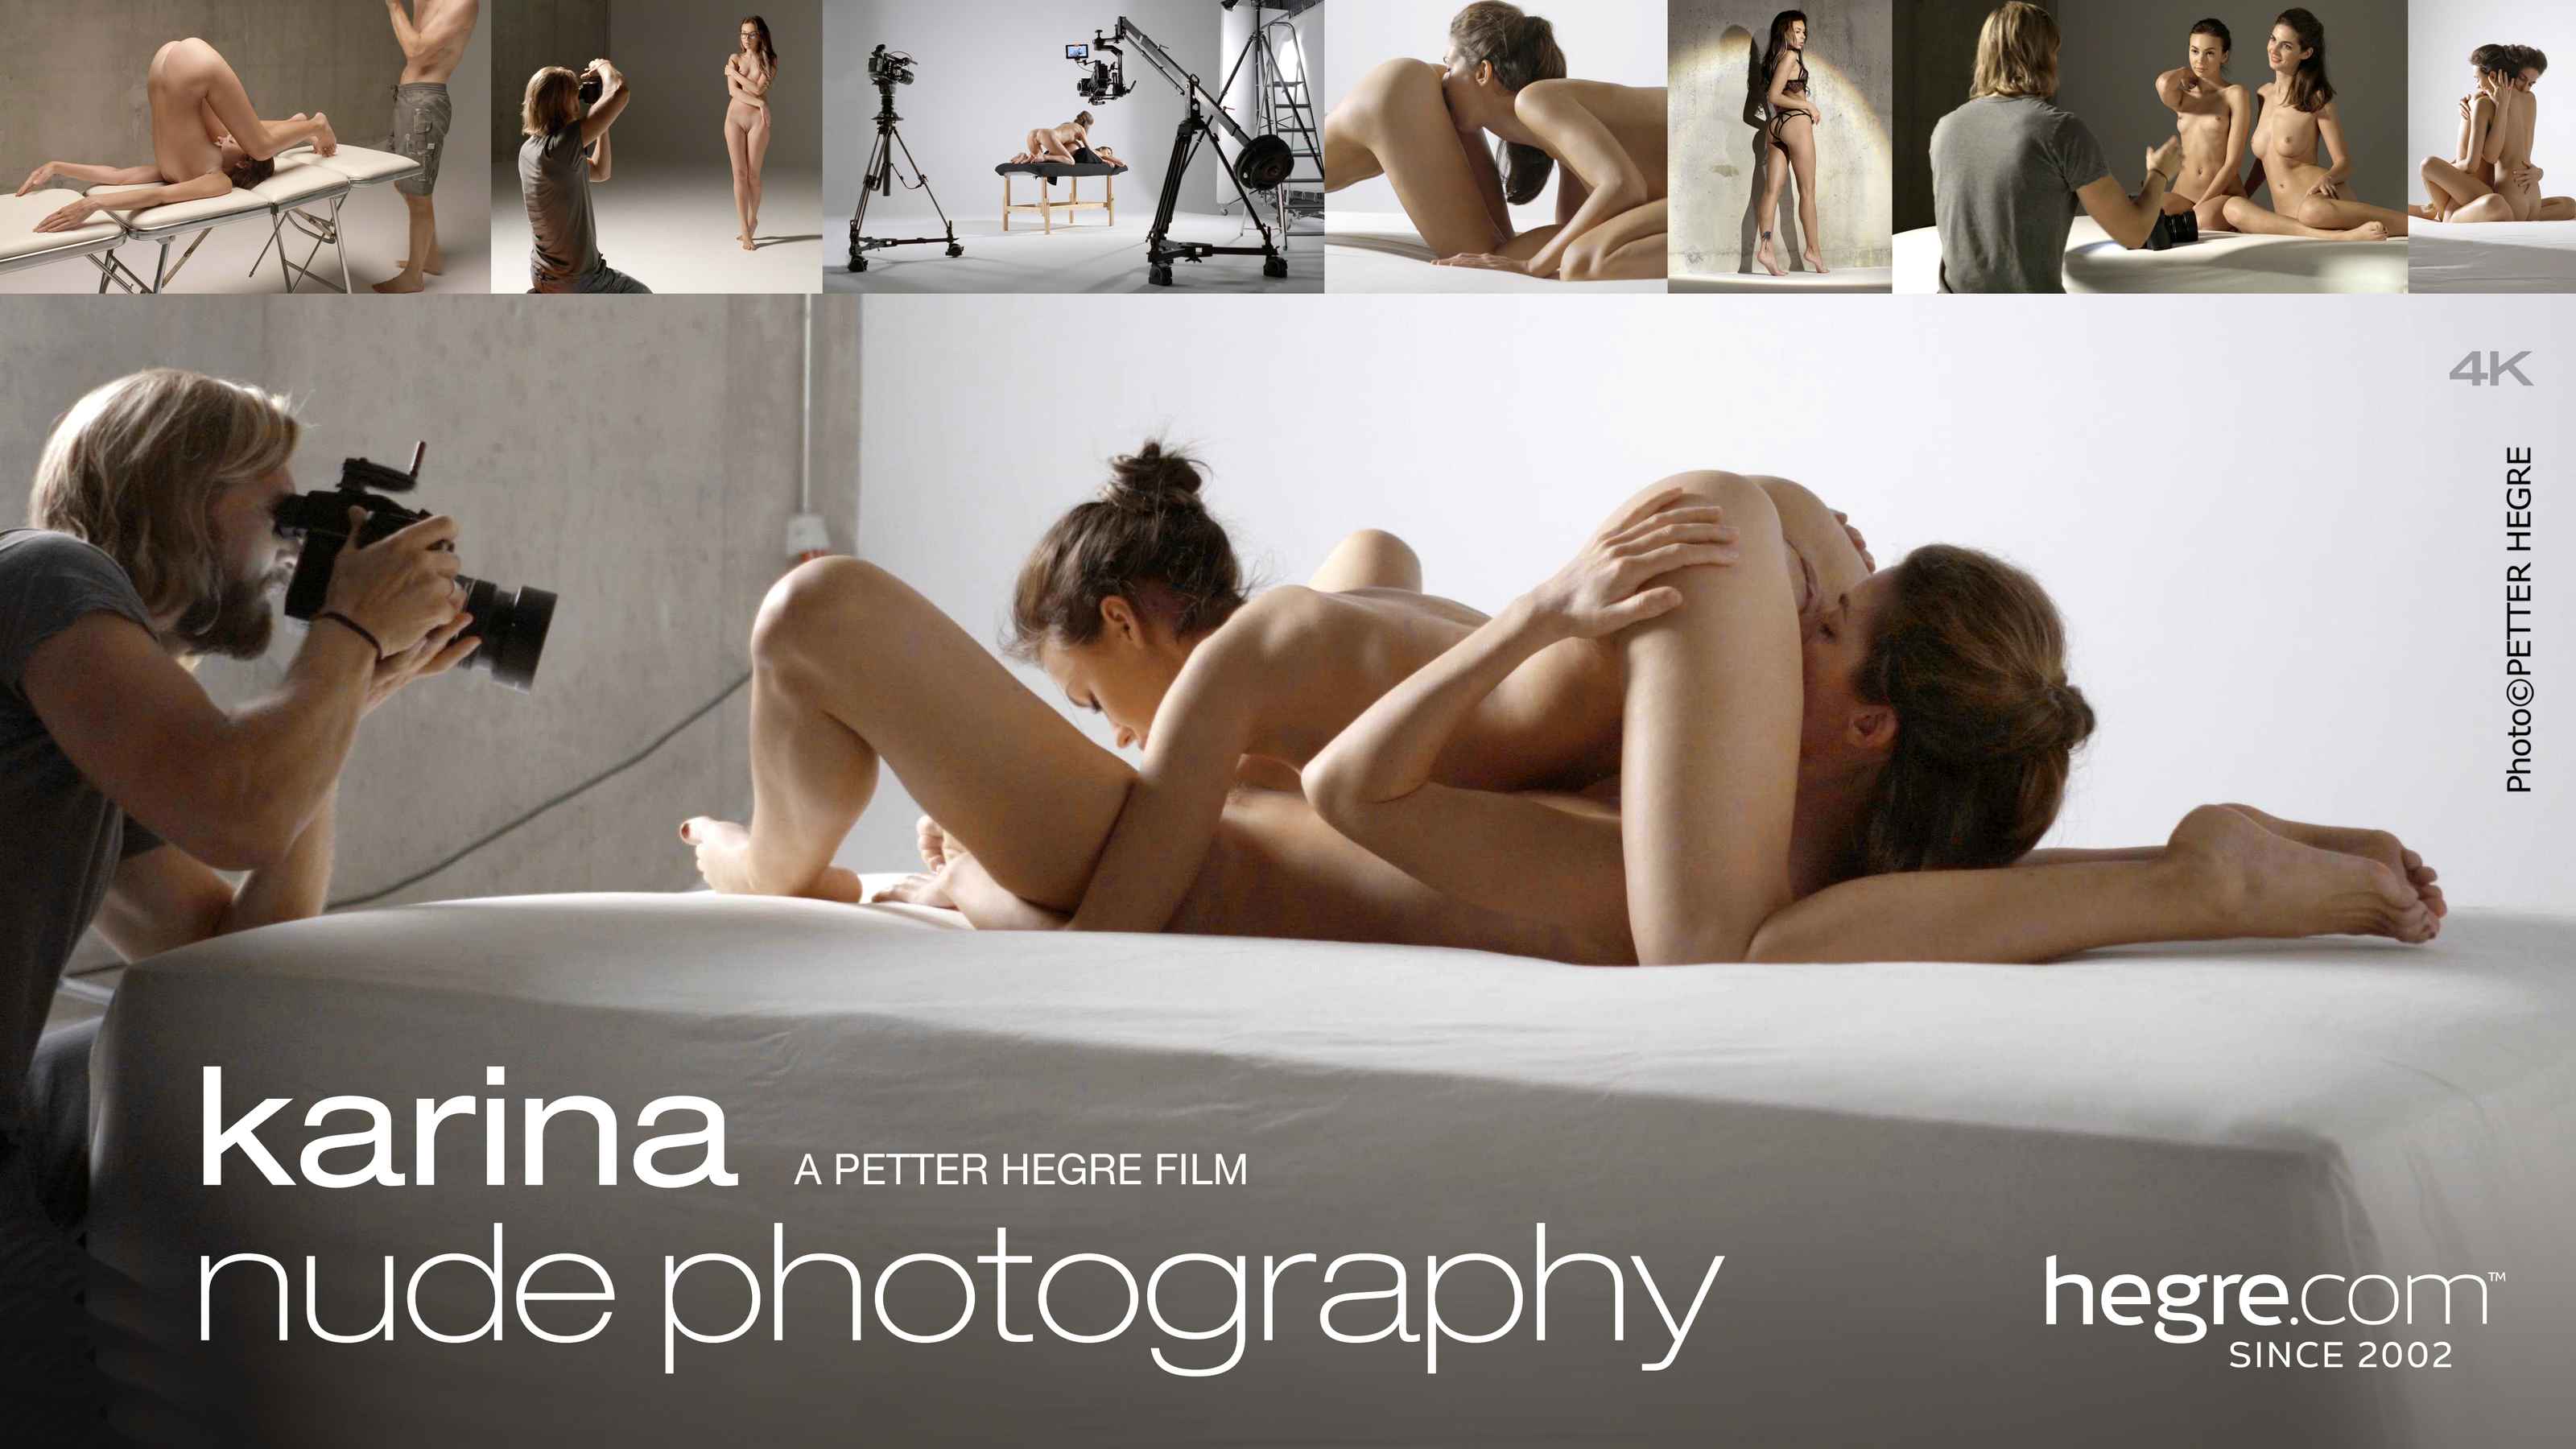 Karina Hegre video 'Nude Photography' Art-Nudes.com.